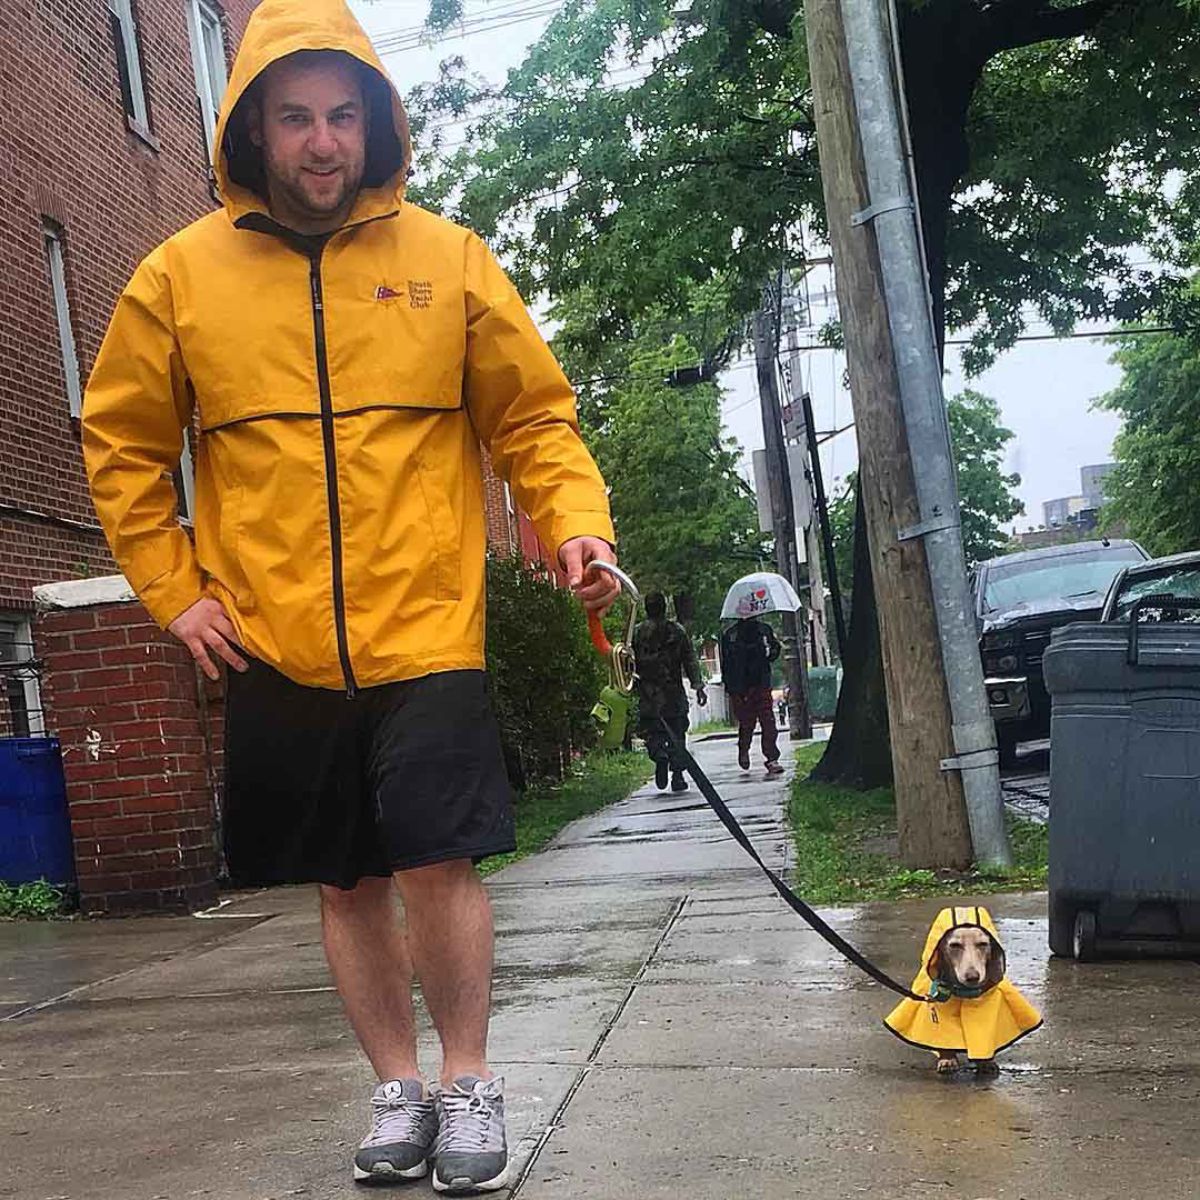 brown dachshund in a yellow raincoat walking on a sidewalk next to a man in a yellow raincoat